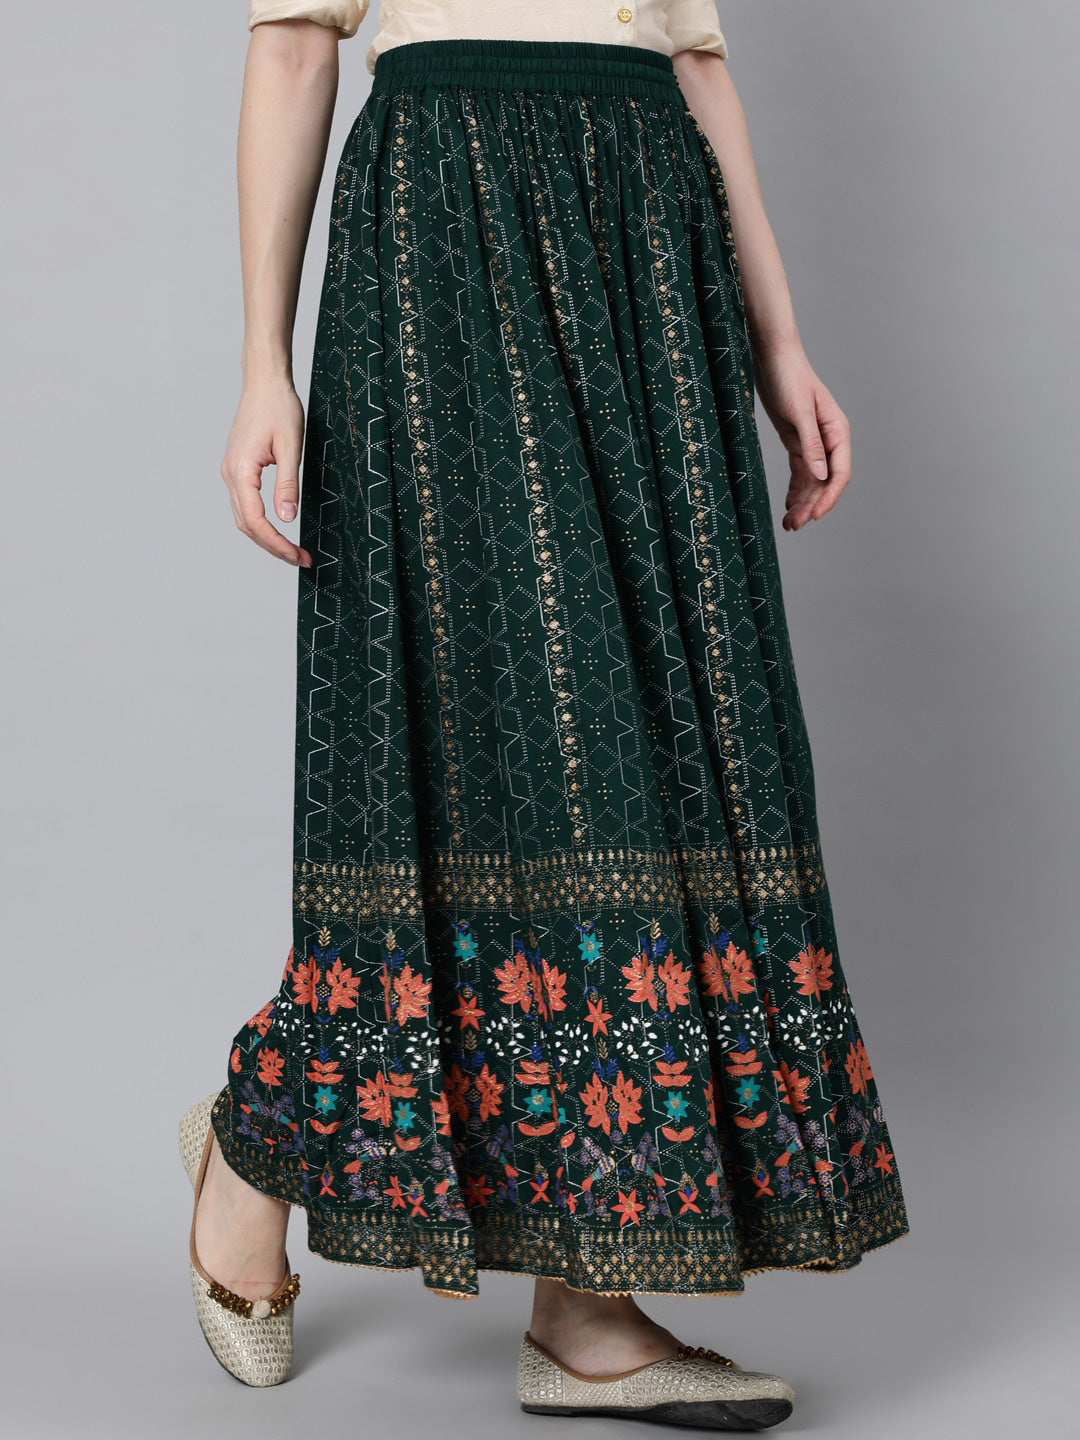 UU Kurti House - Now Shop #UU Designer Kurtis online on Amazon Shopping App  https://www.amazon.in/dp/B08CS1ZL21/ref=cm_sw_r_other_apa_i_-3ucFb0C7NYYQ  #UU UU Women's Khadi Cotton Olive Green Straight Kurti with Embroidery  #Ladies #Fashion #Clothingbrand ...